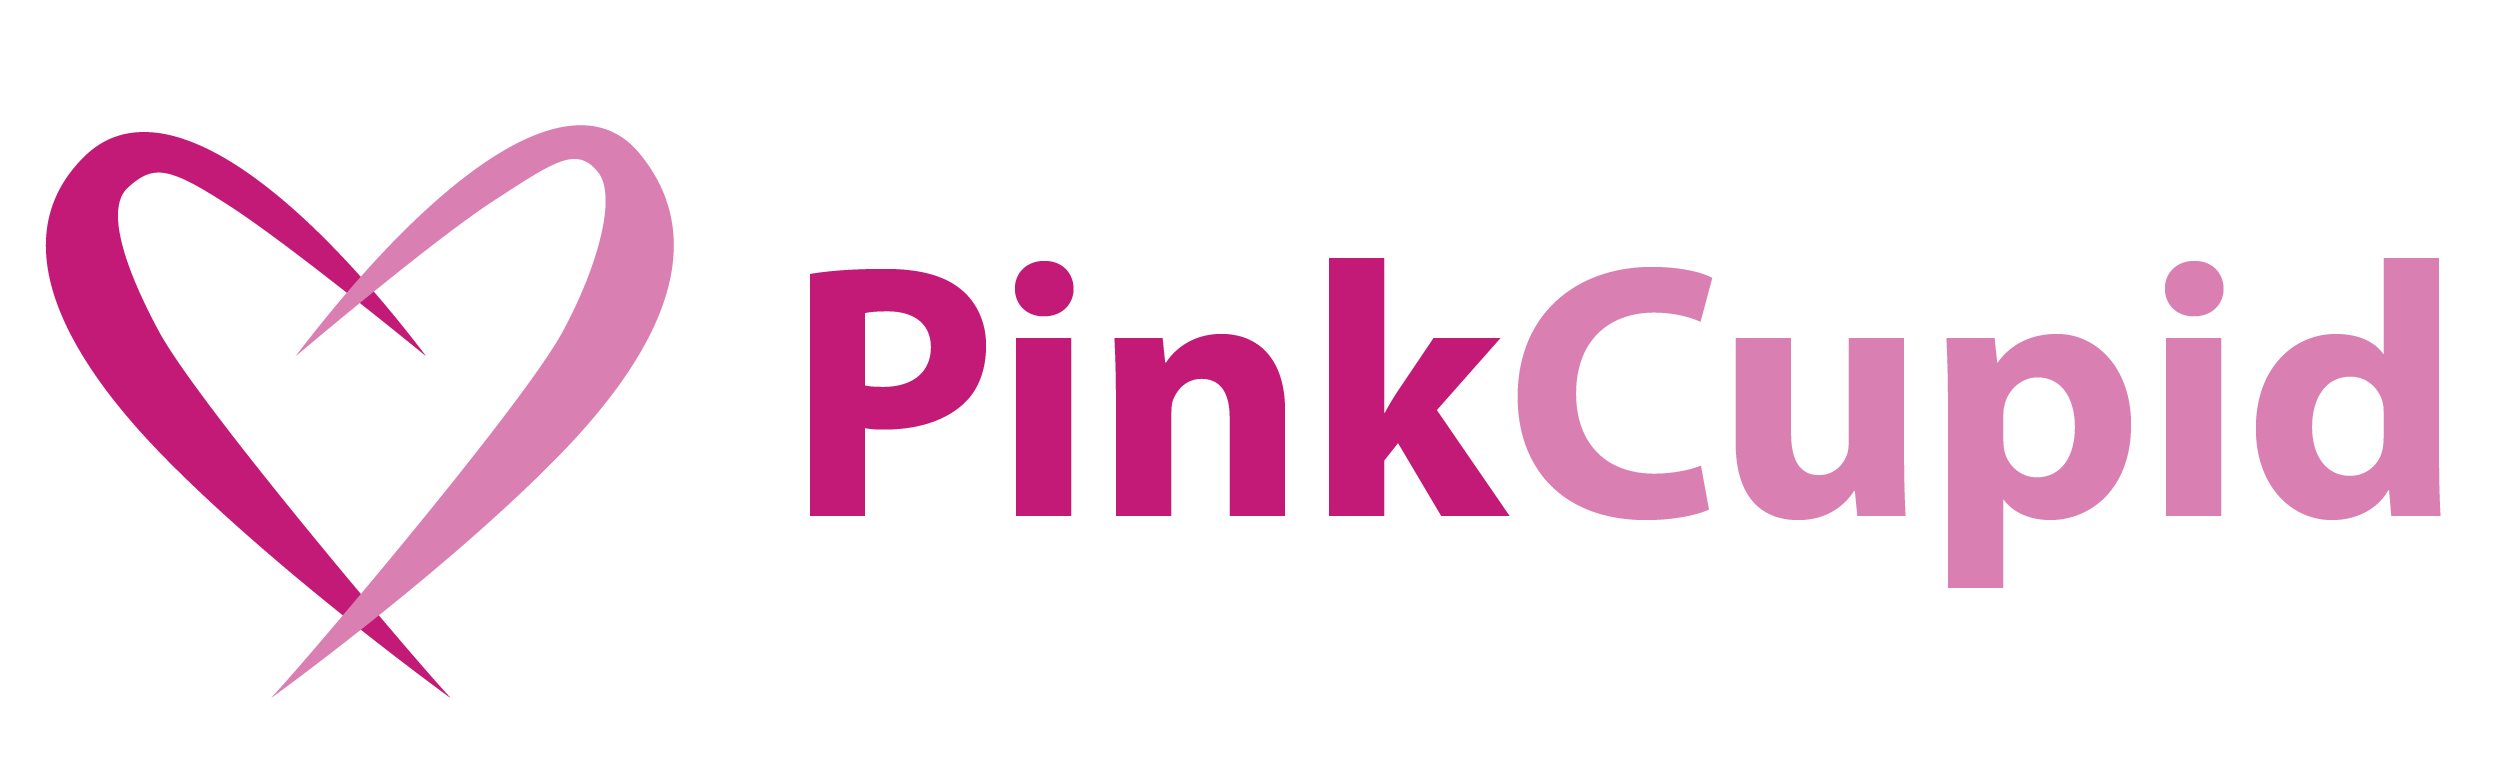 PinkCupid